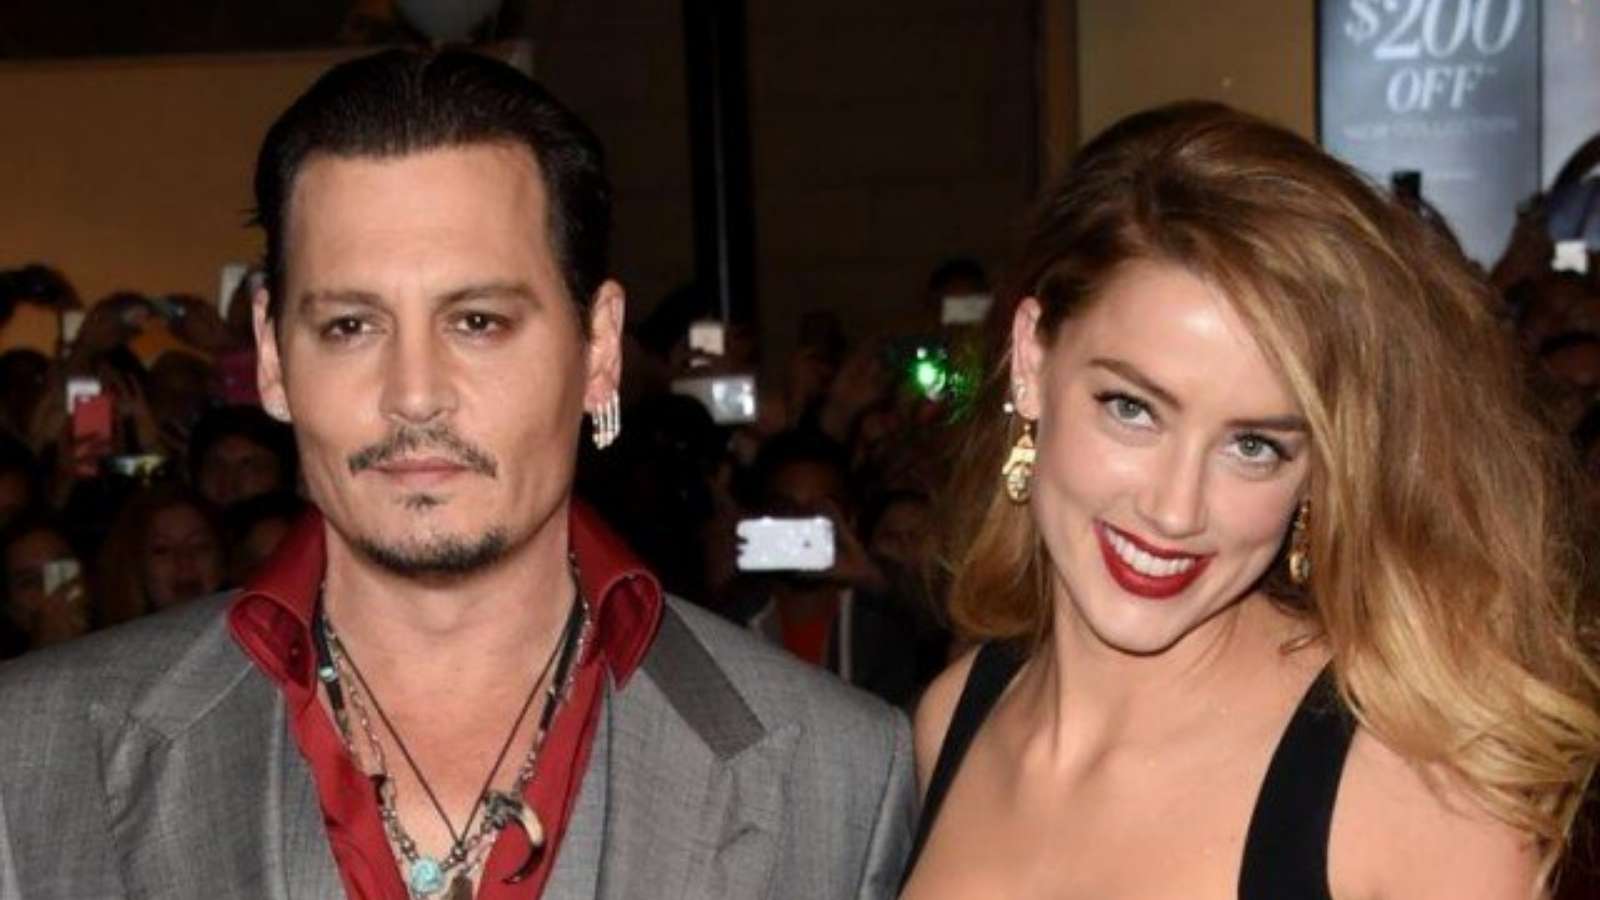  Johnny Depp and Amber Heard